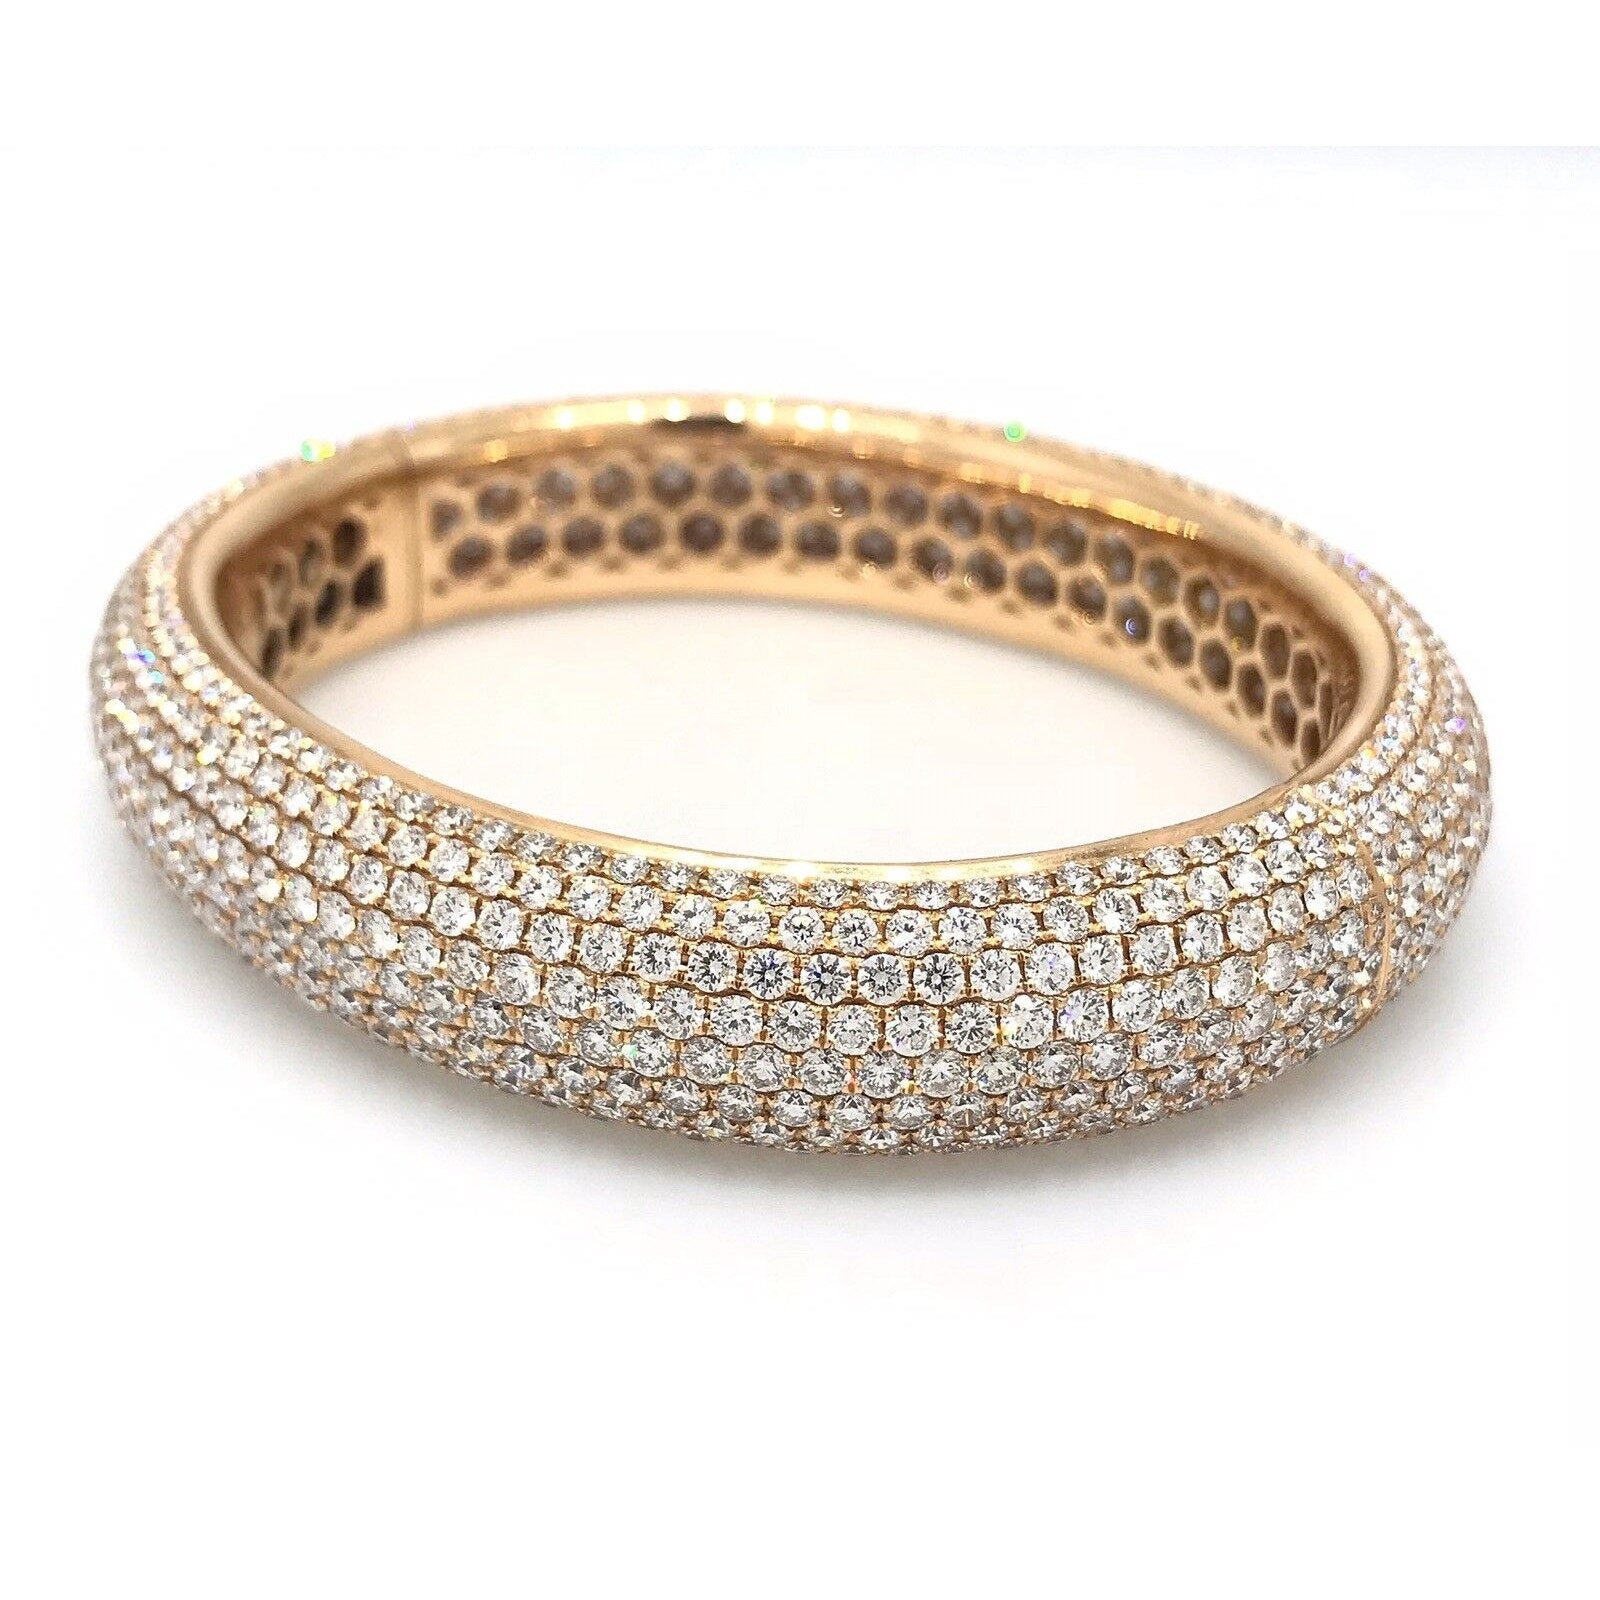 24.25 ct Diamond Pave Bangle Bracelet in 18k Rose Gold